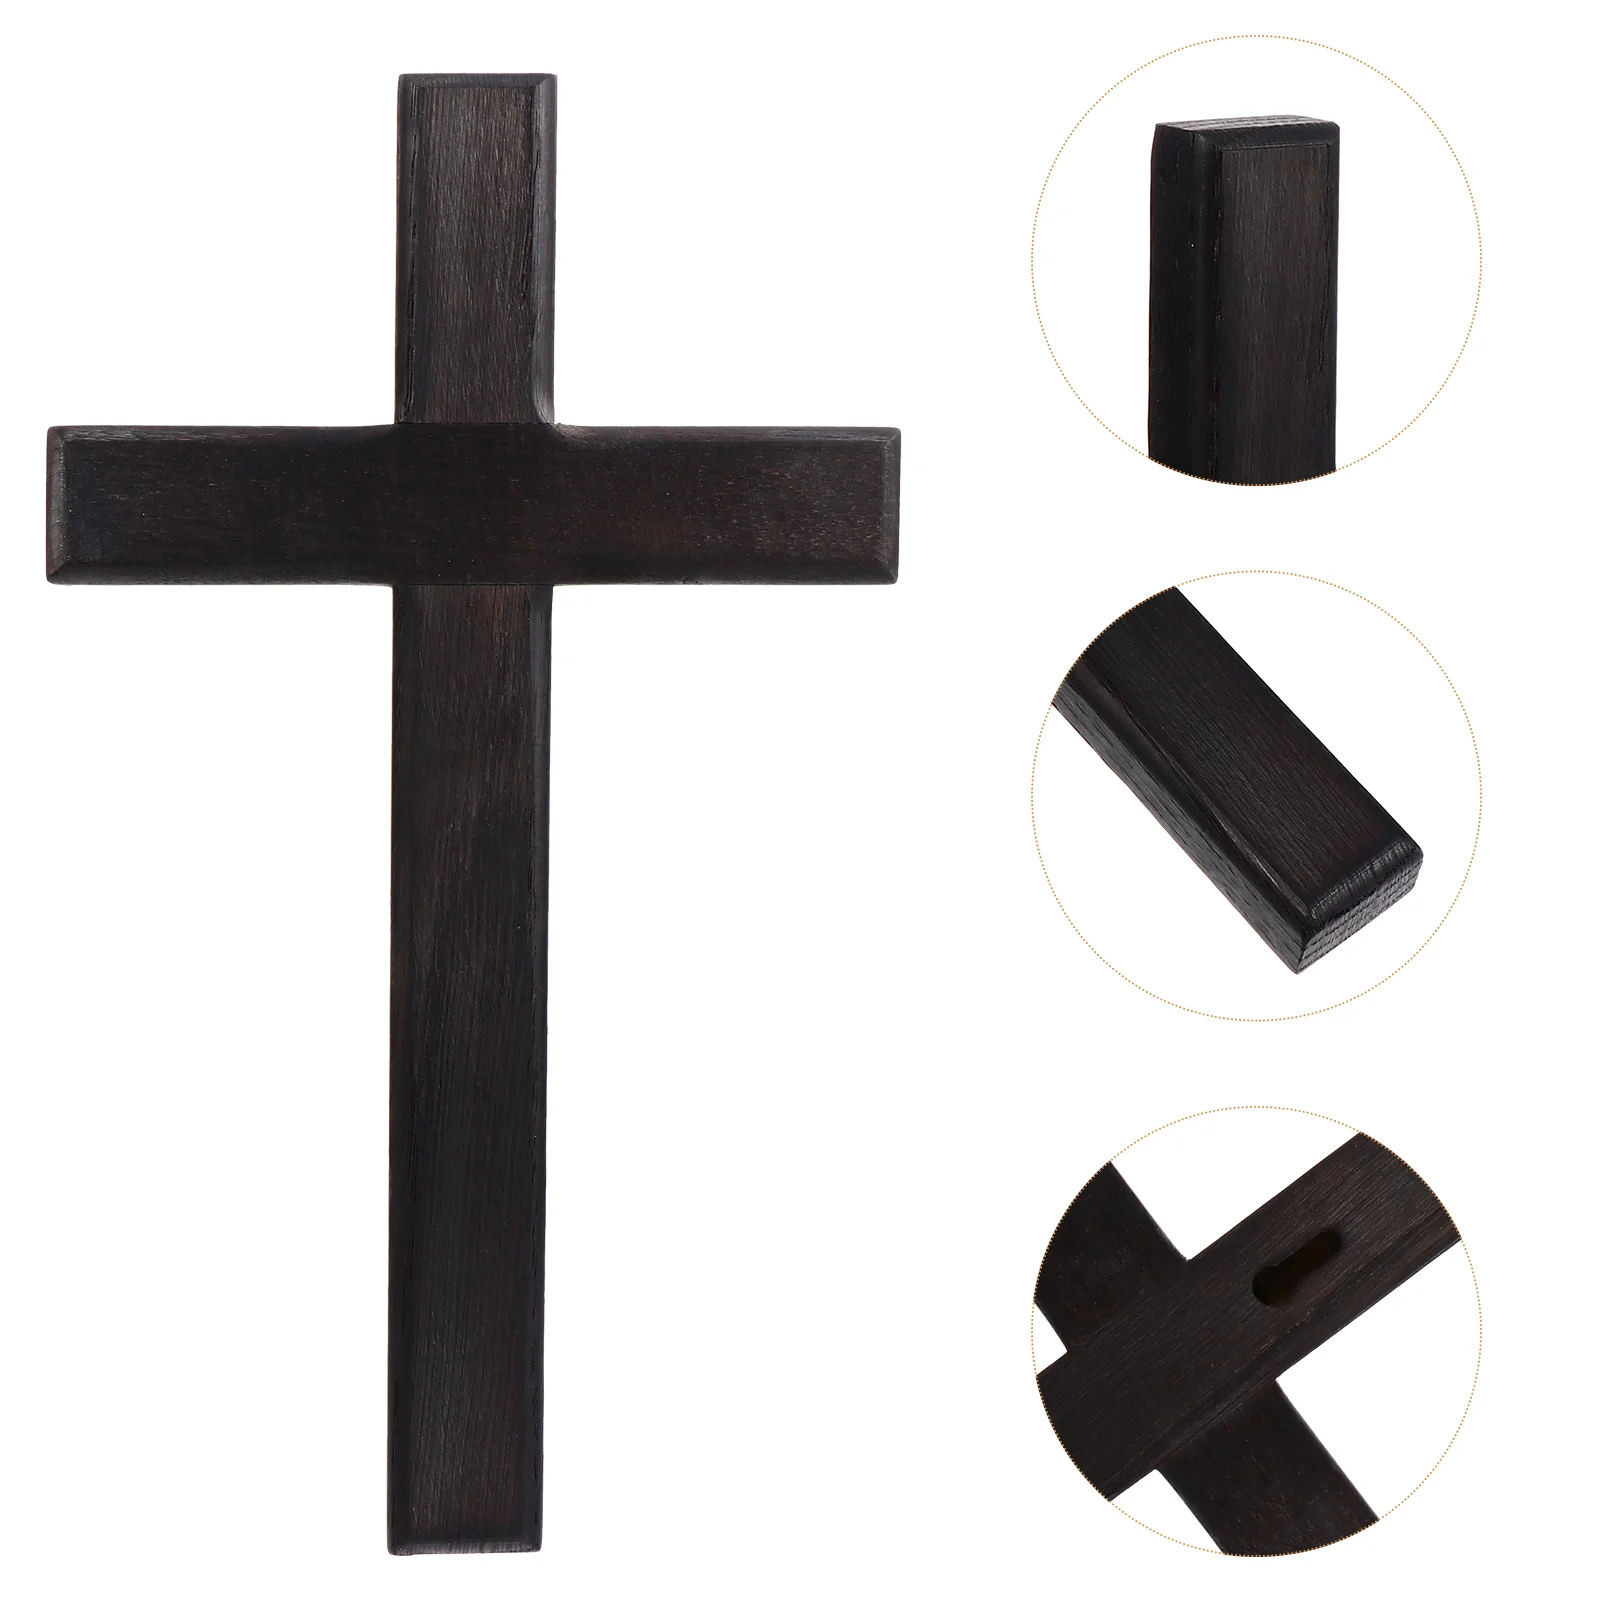 

Cross Wooden Crafts Christian Pendant Jesus Delicate Rustic Table Decor Decorations